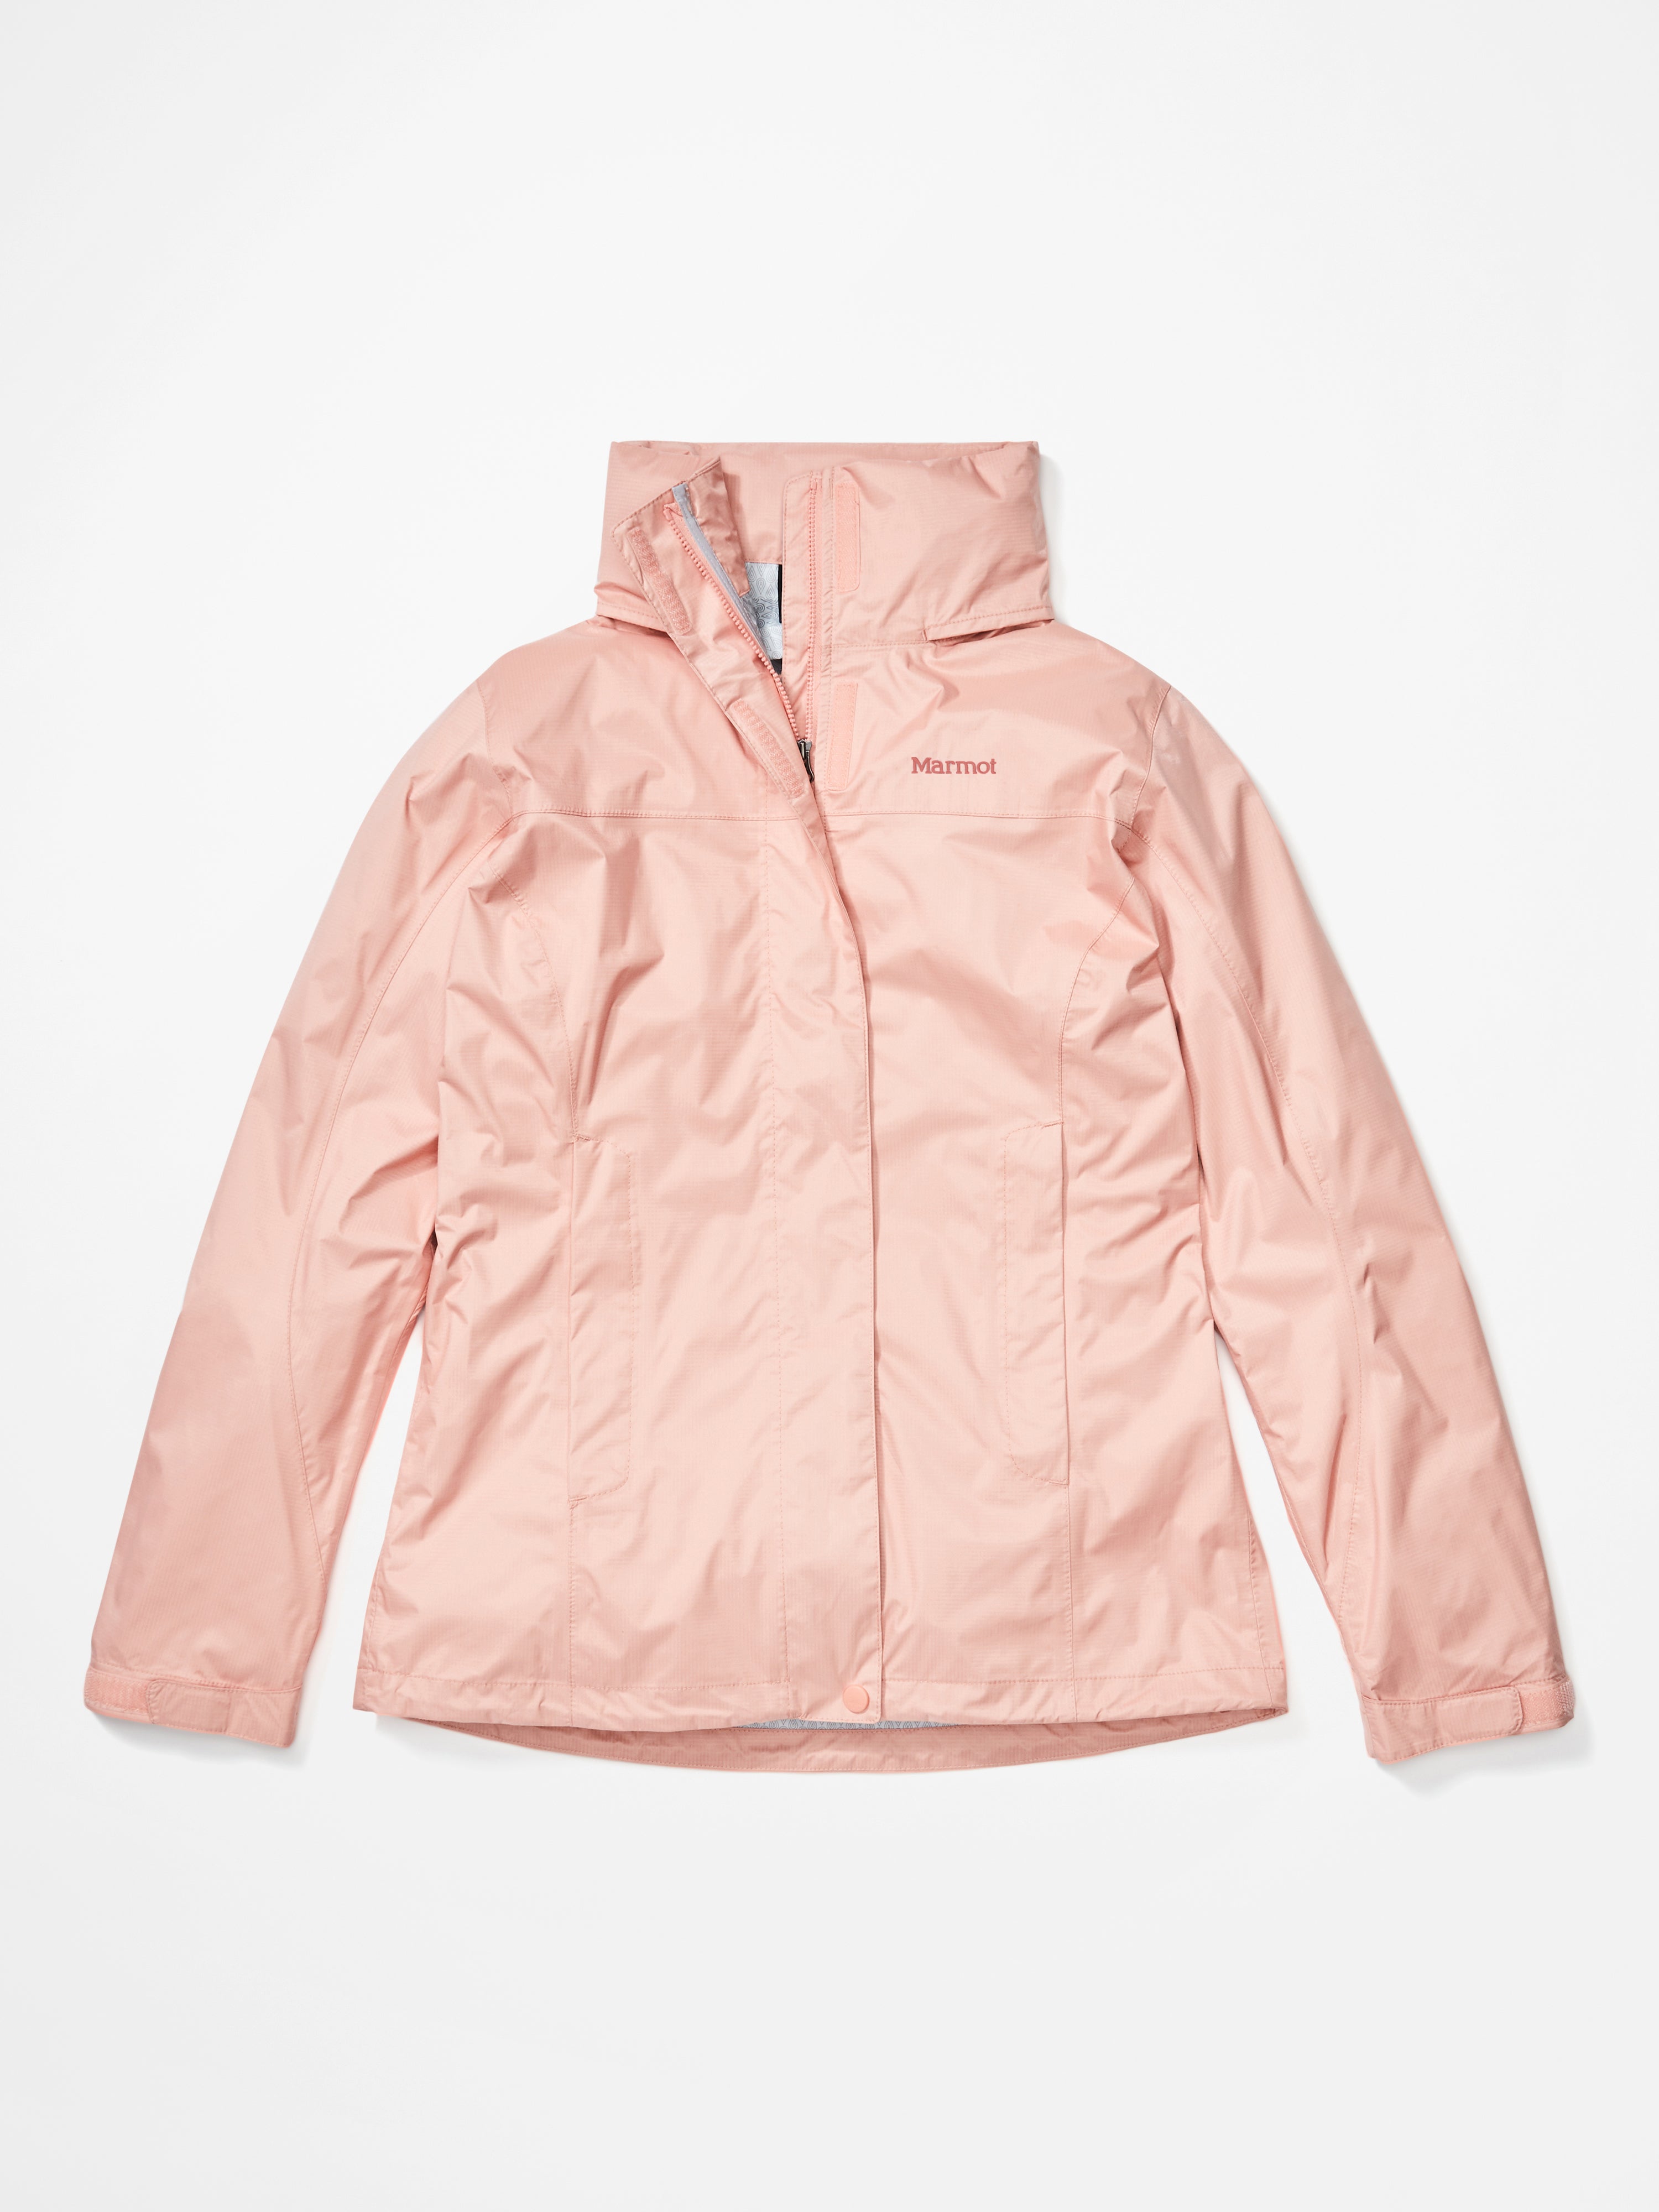 Spyder Ski Jacket Womens Size 8 Cream Pink